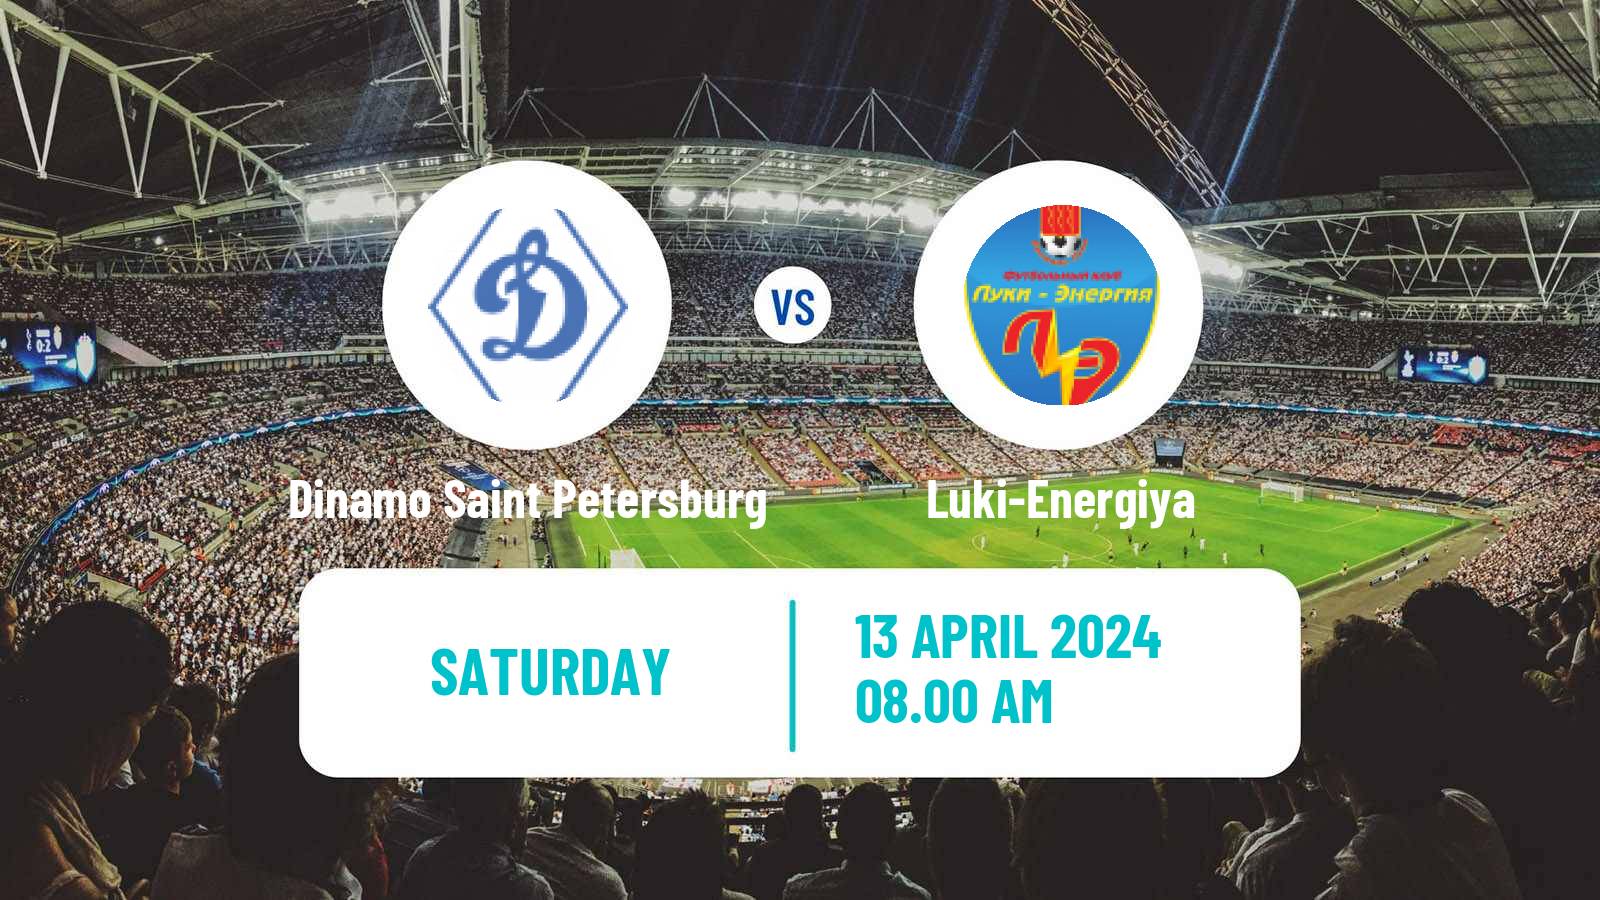 Soccer FNL 2 Division B Group 2 Dinamo Saint Petersburg - Luki-Energiya